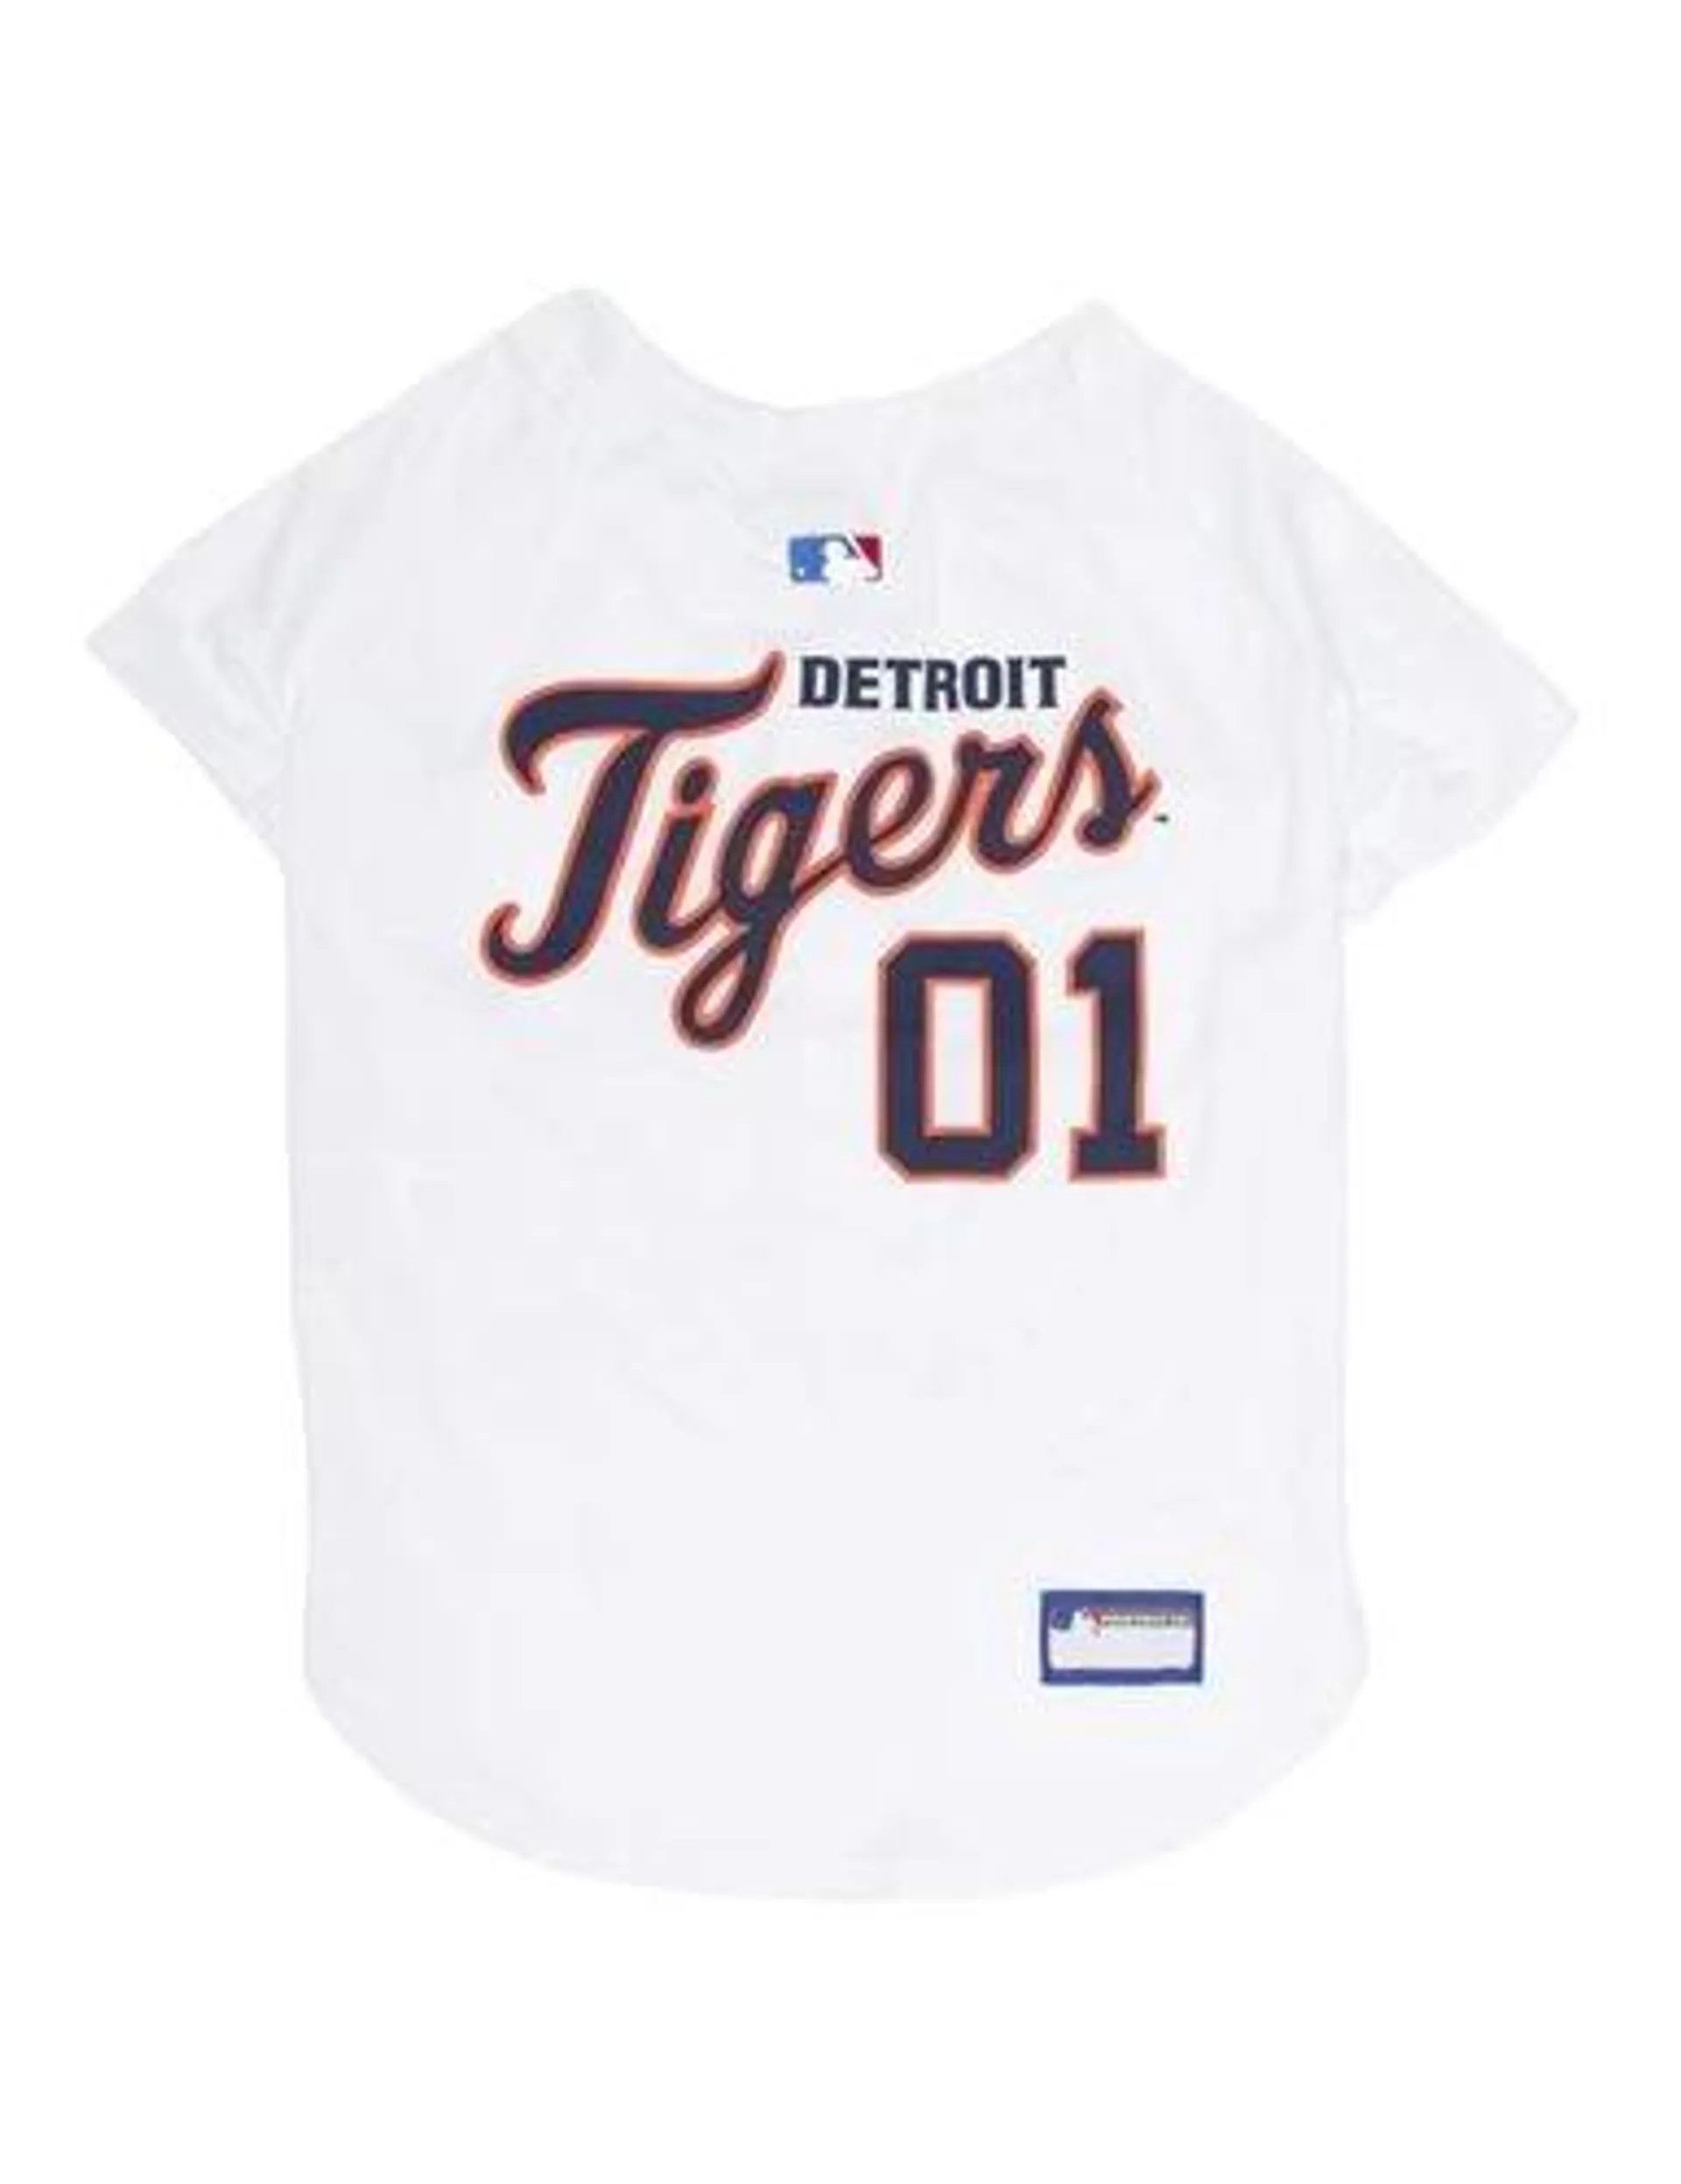 Pets First MLB Jersey Detroit Tigers, Medium